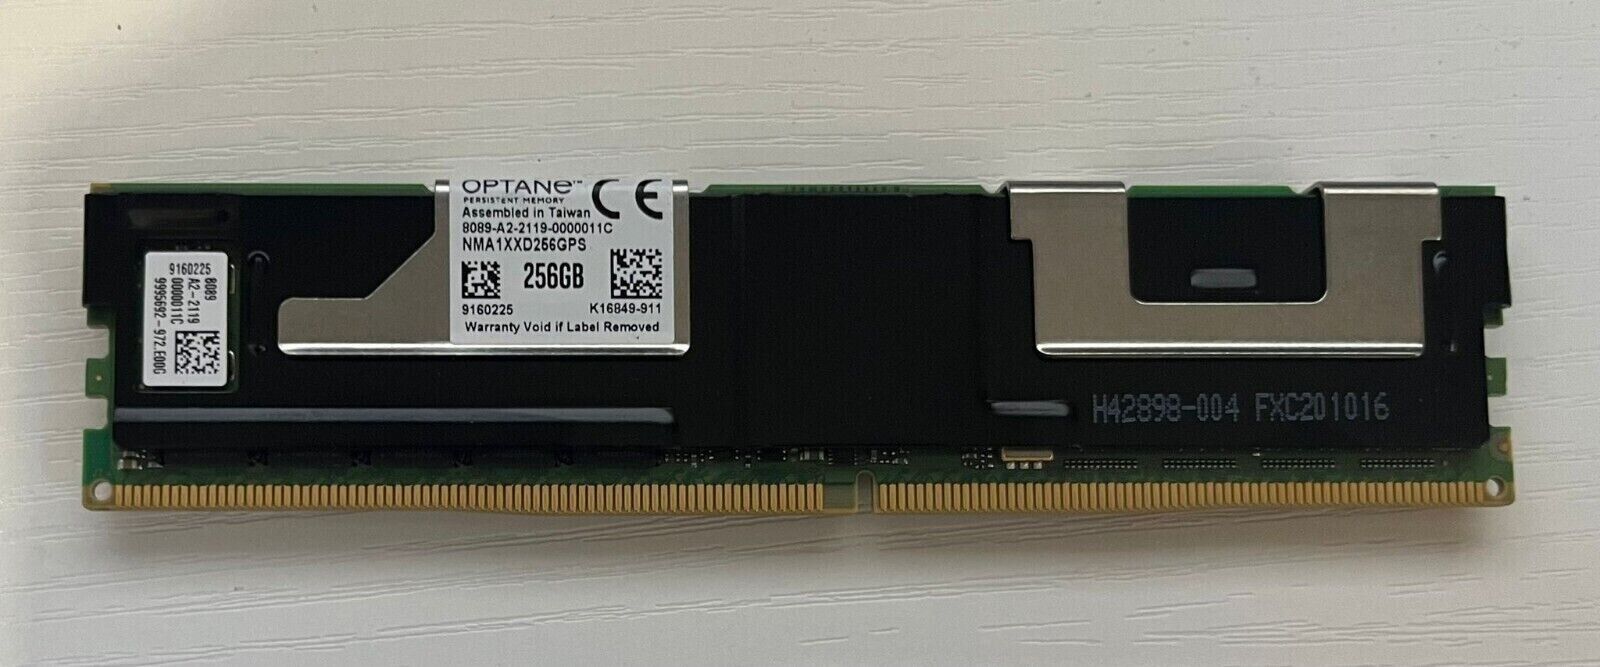 NMA1XXD256GPS Intel 256GB Optane Persistent Memory